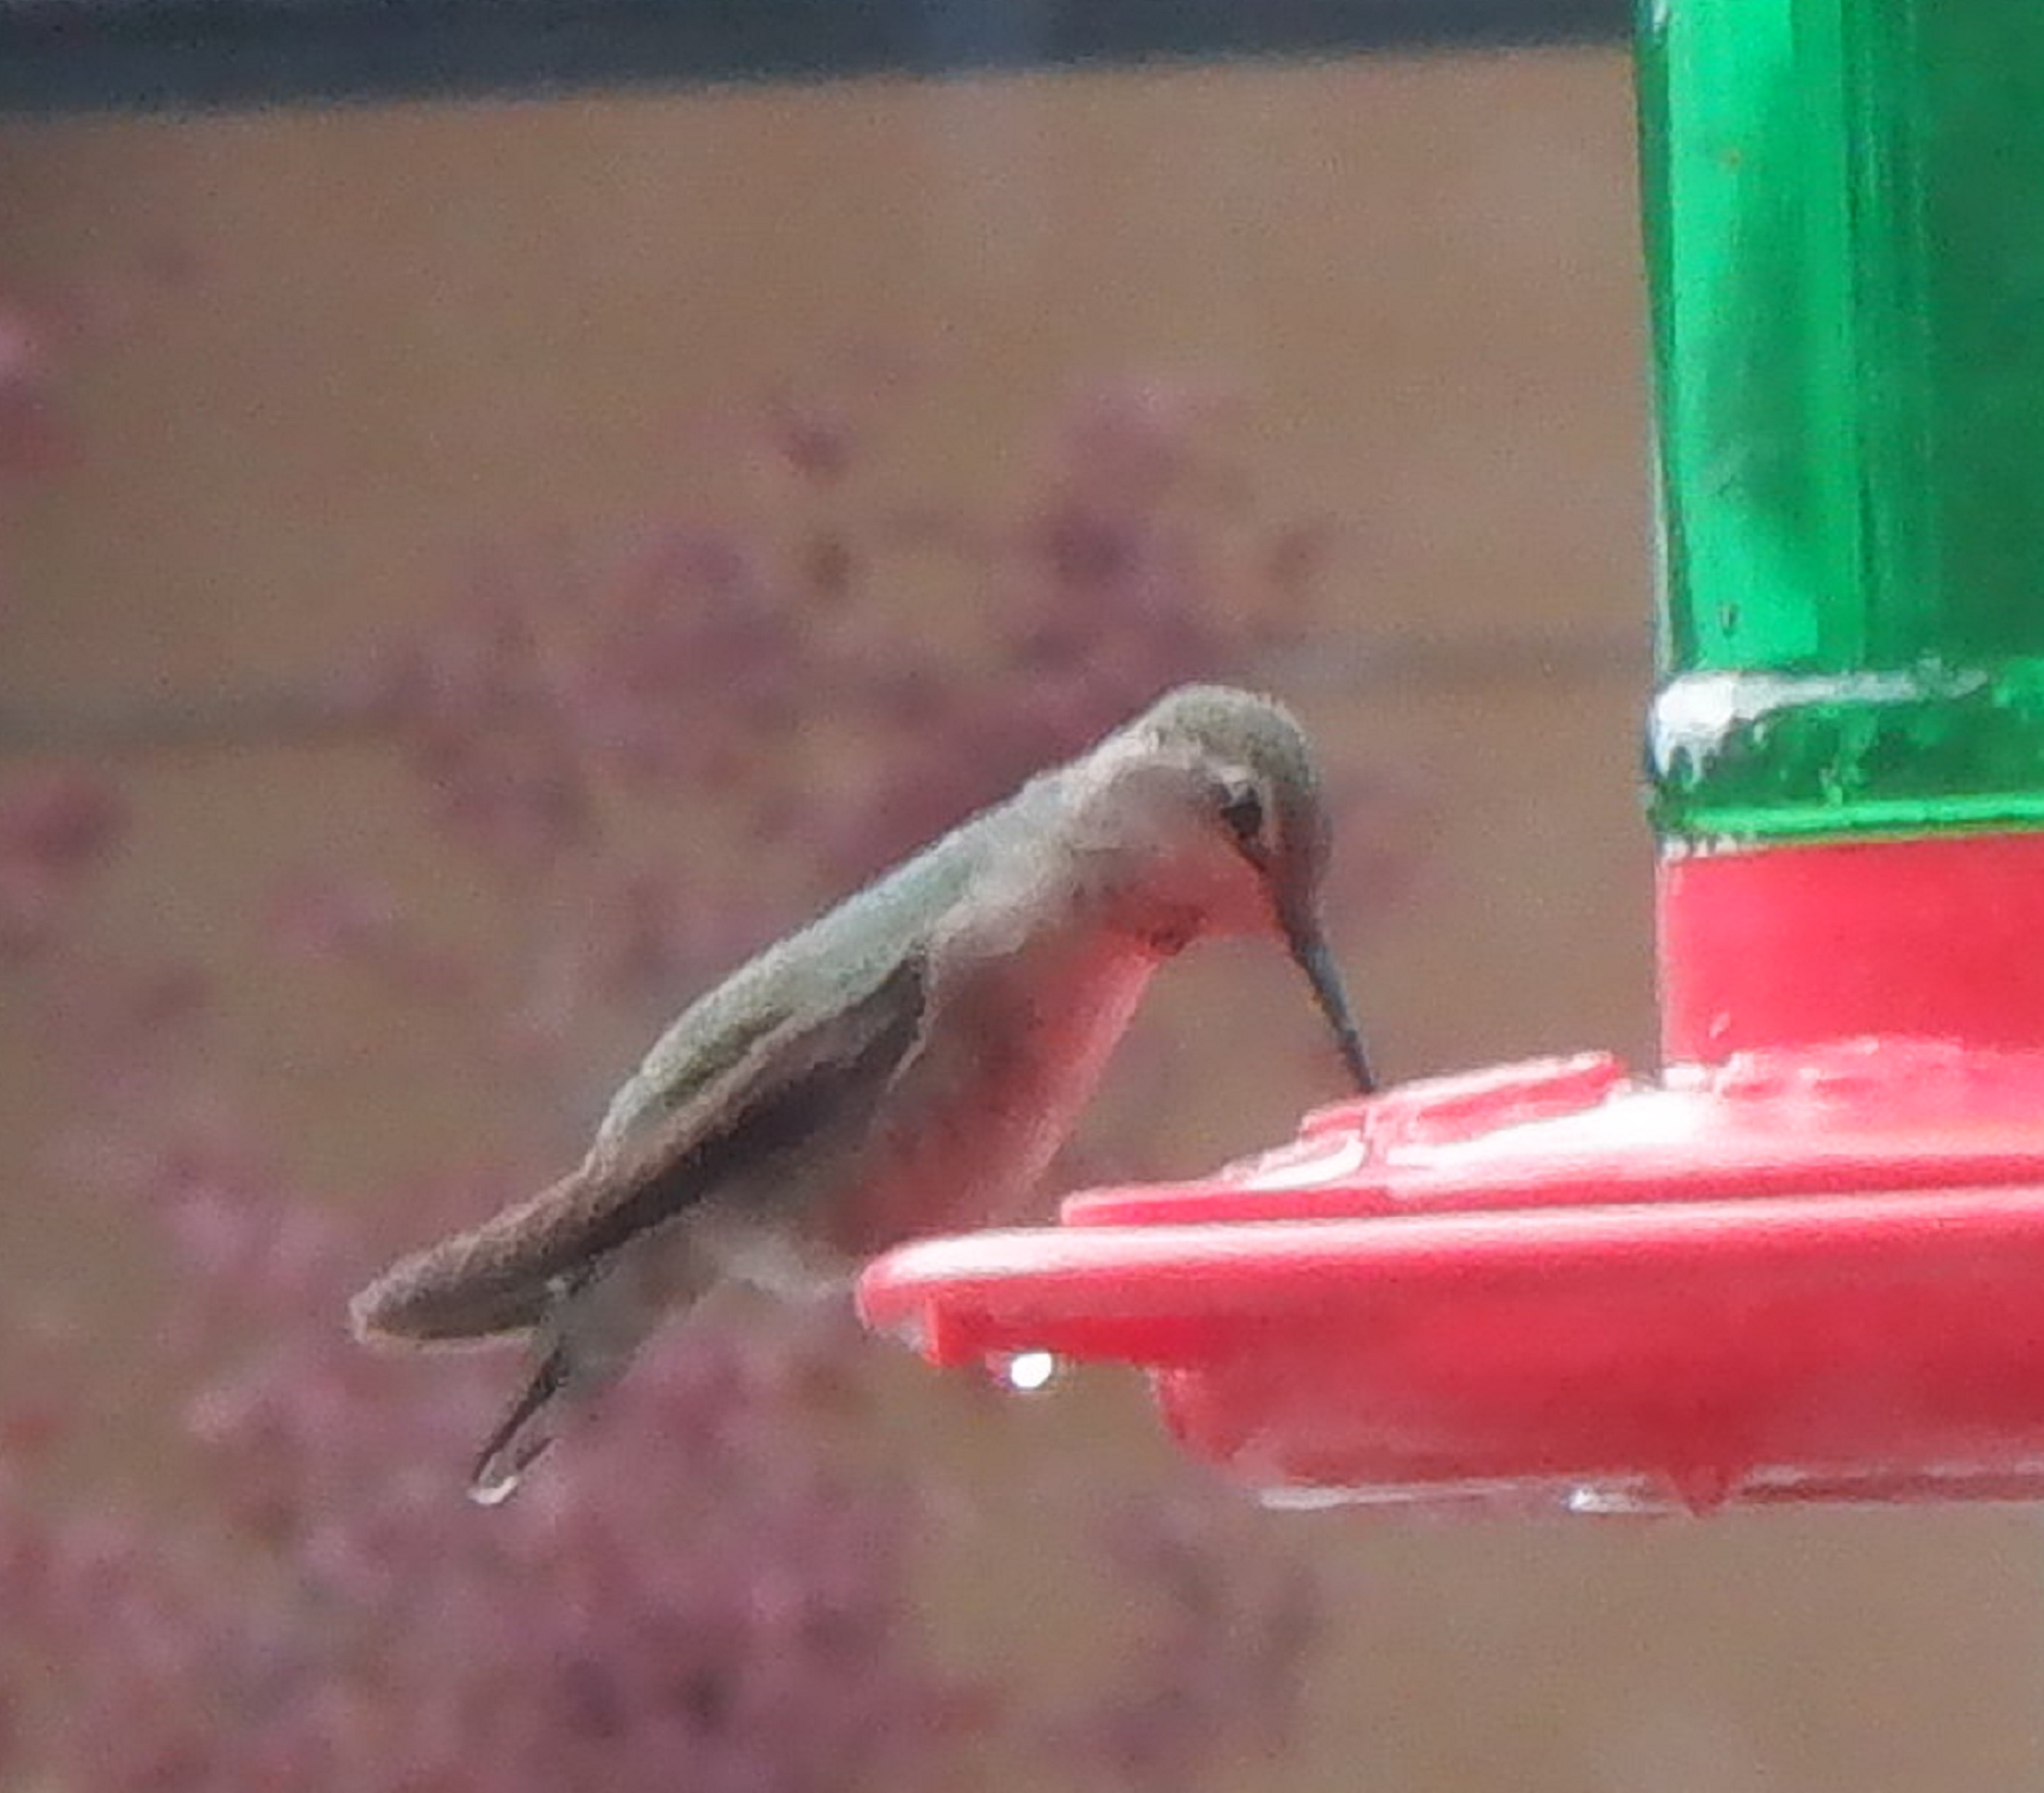 Hummingbird at feeder photo taken by me 3-19-22